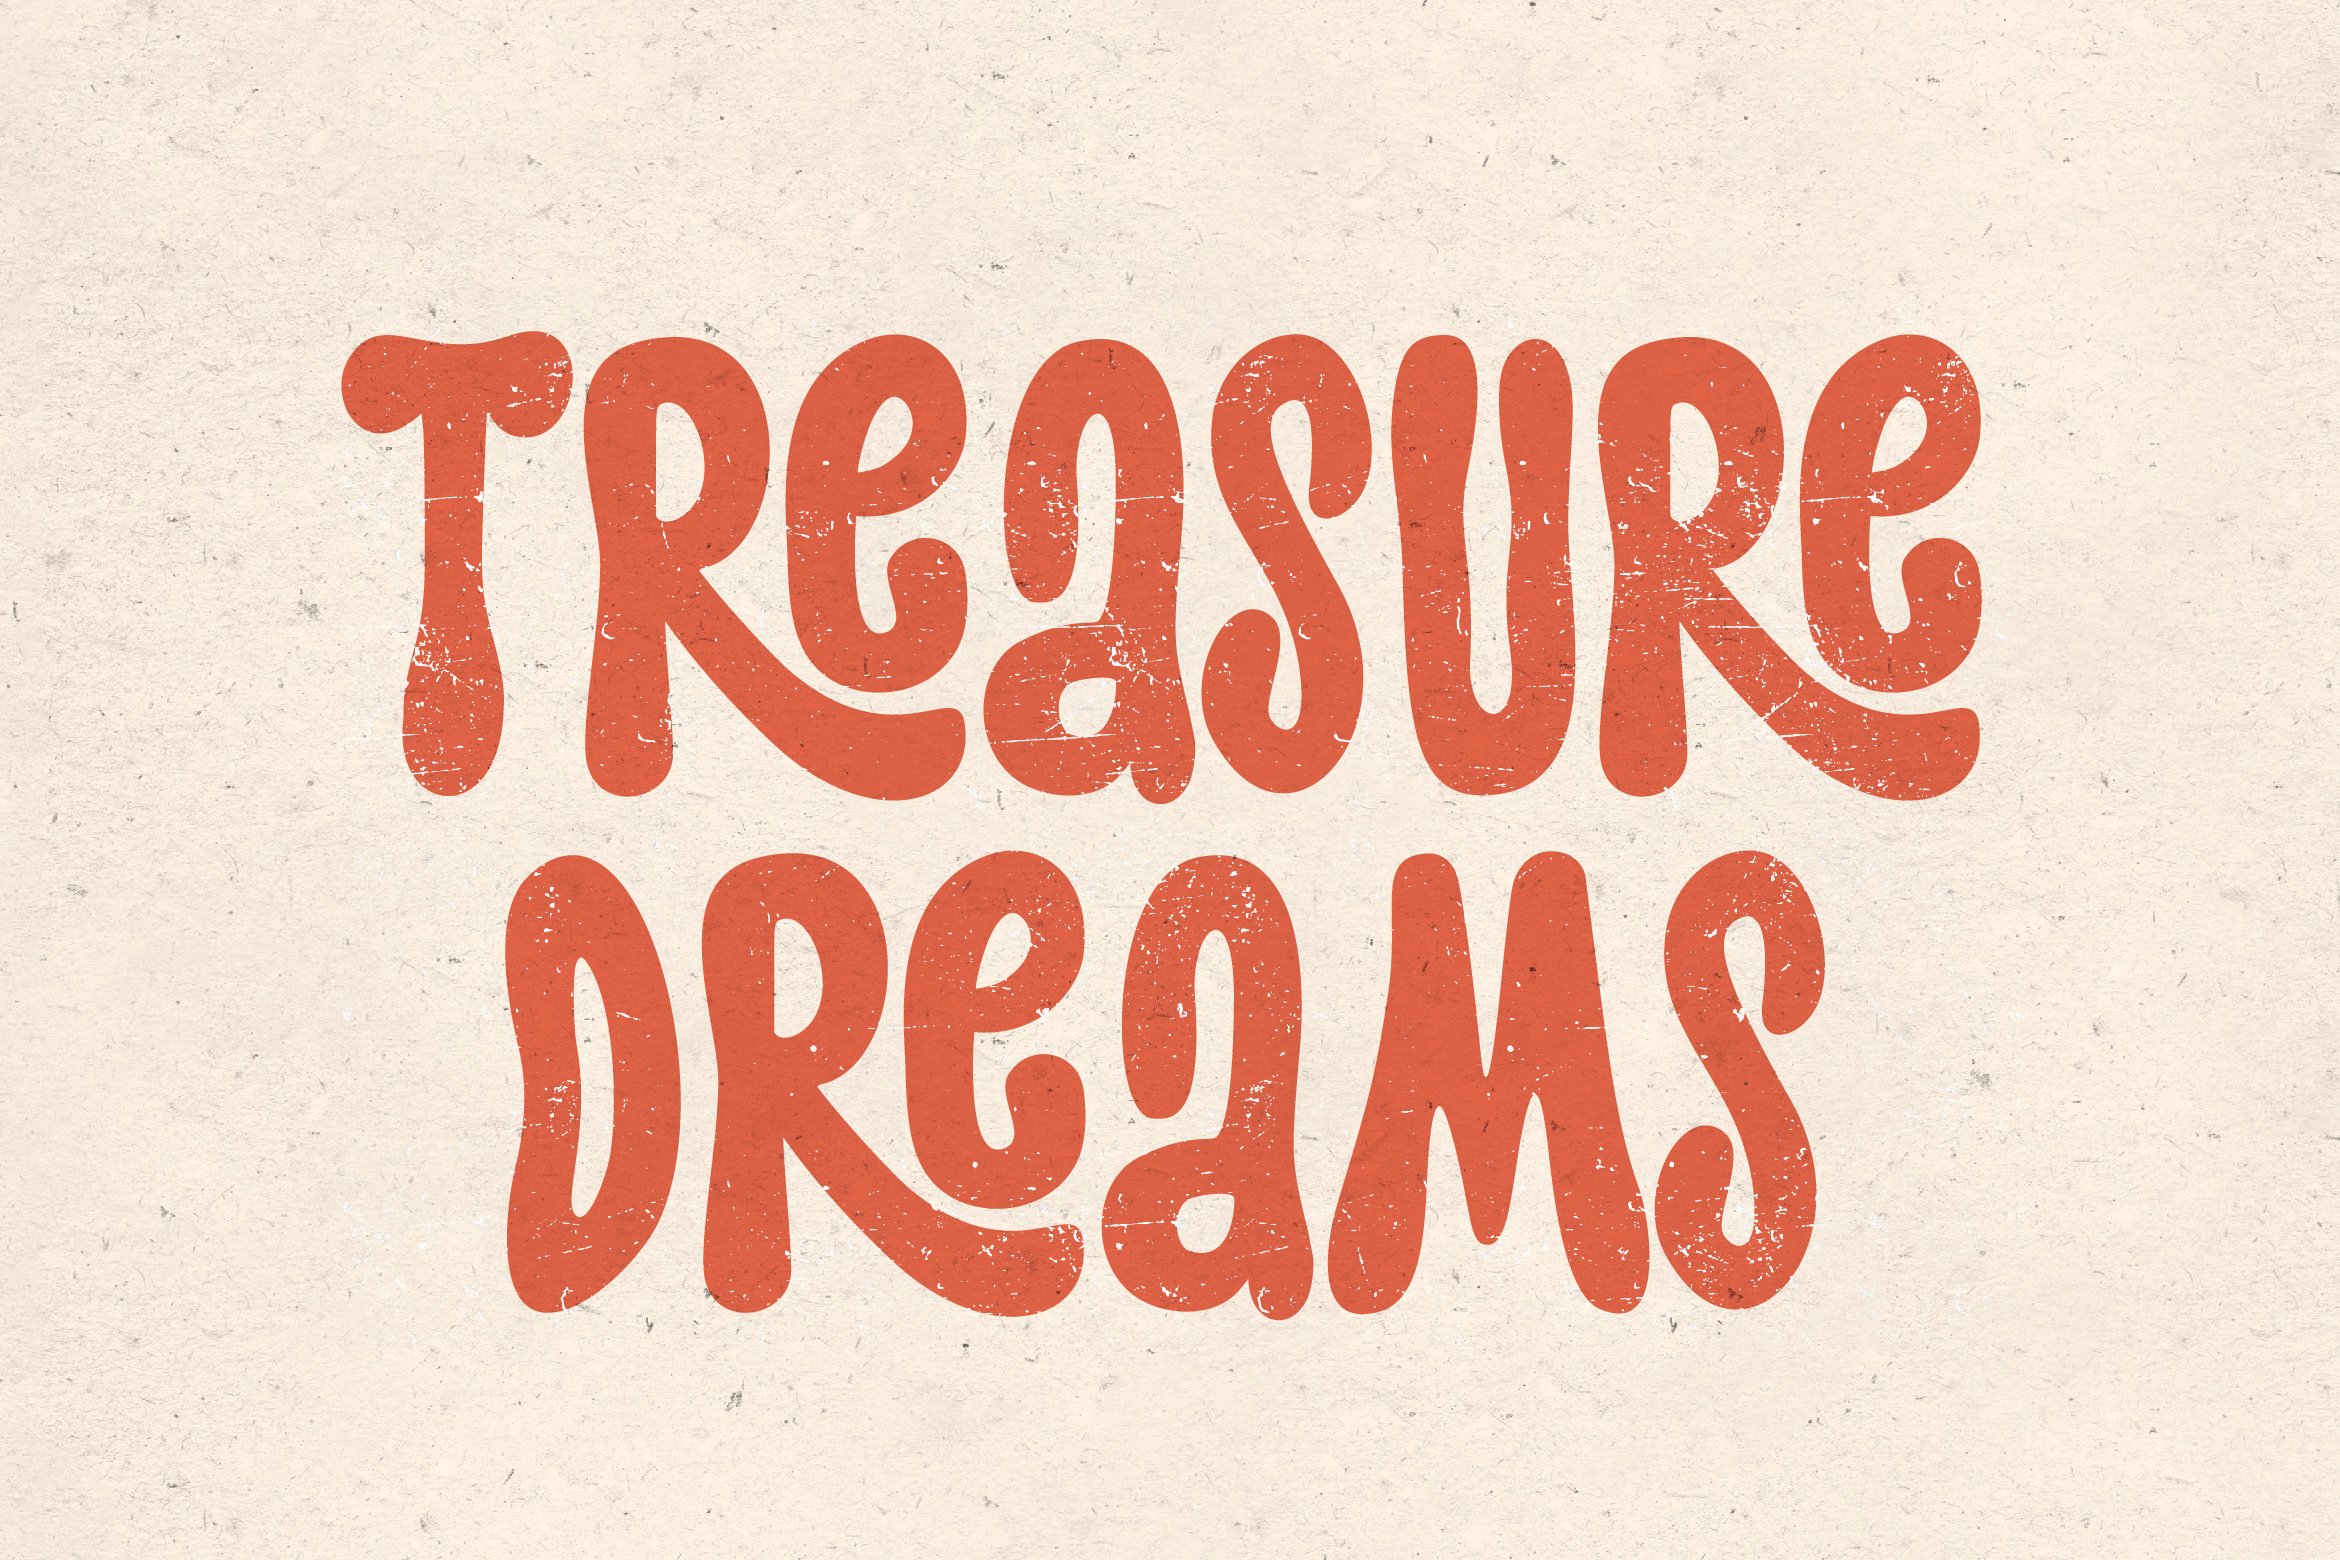 Treasure Dreams cover image.